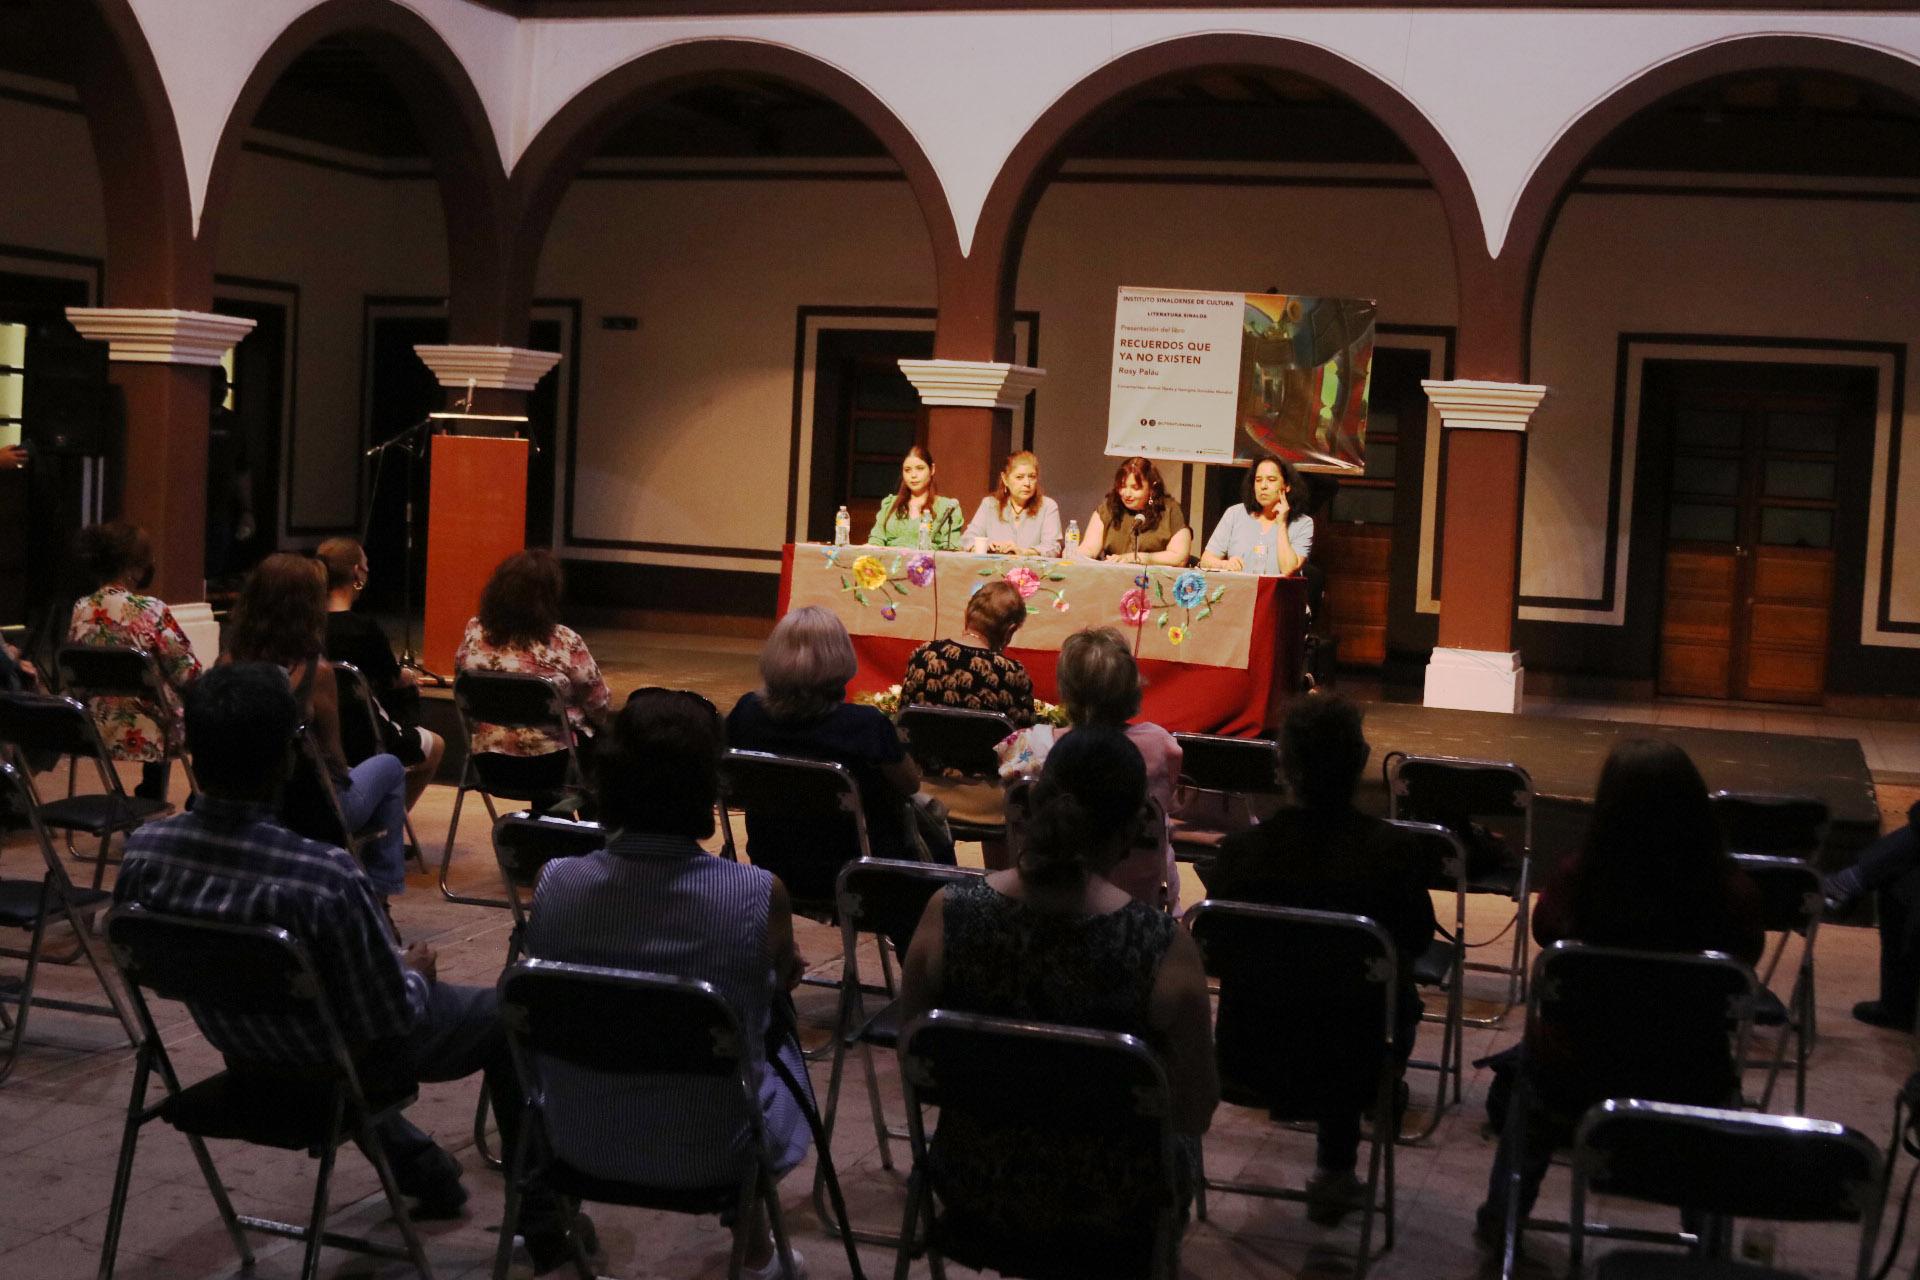 $!La autora estuvo acompañada por Marysol Ojeda, Georgina González Mendívil y Ernestina Yépiz.